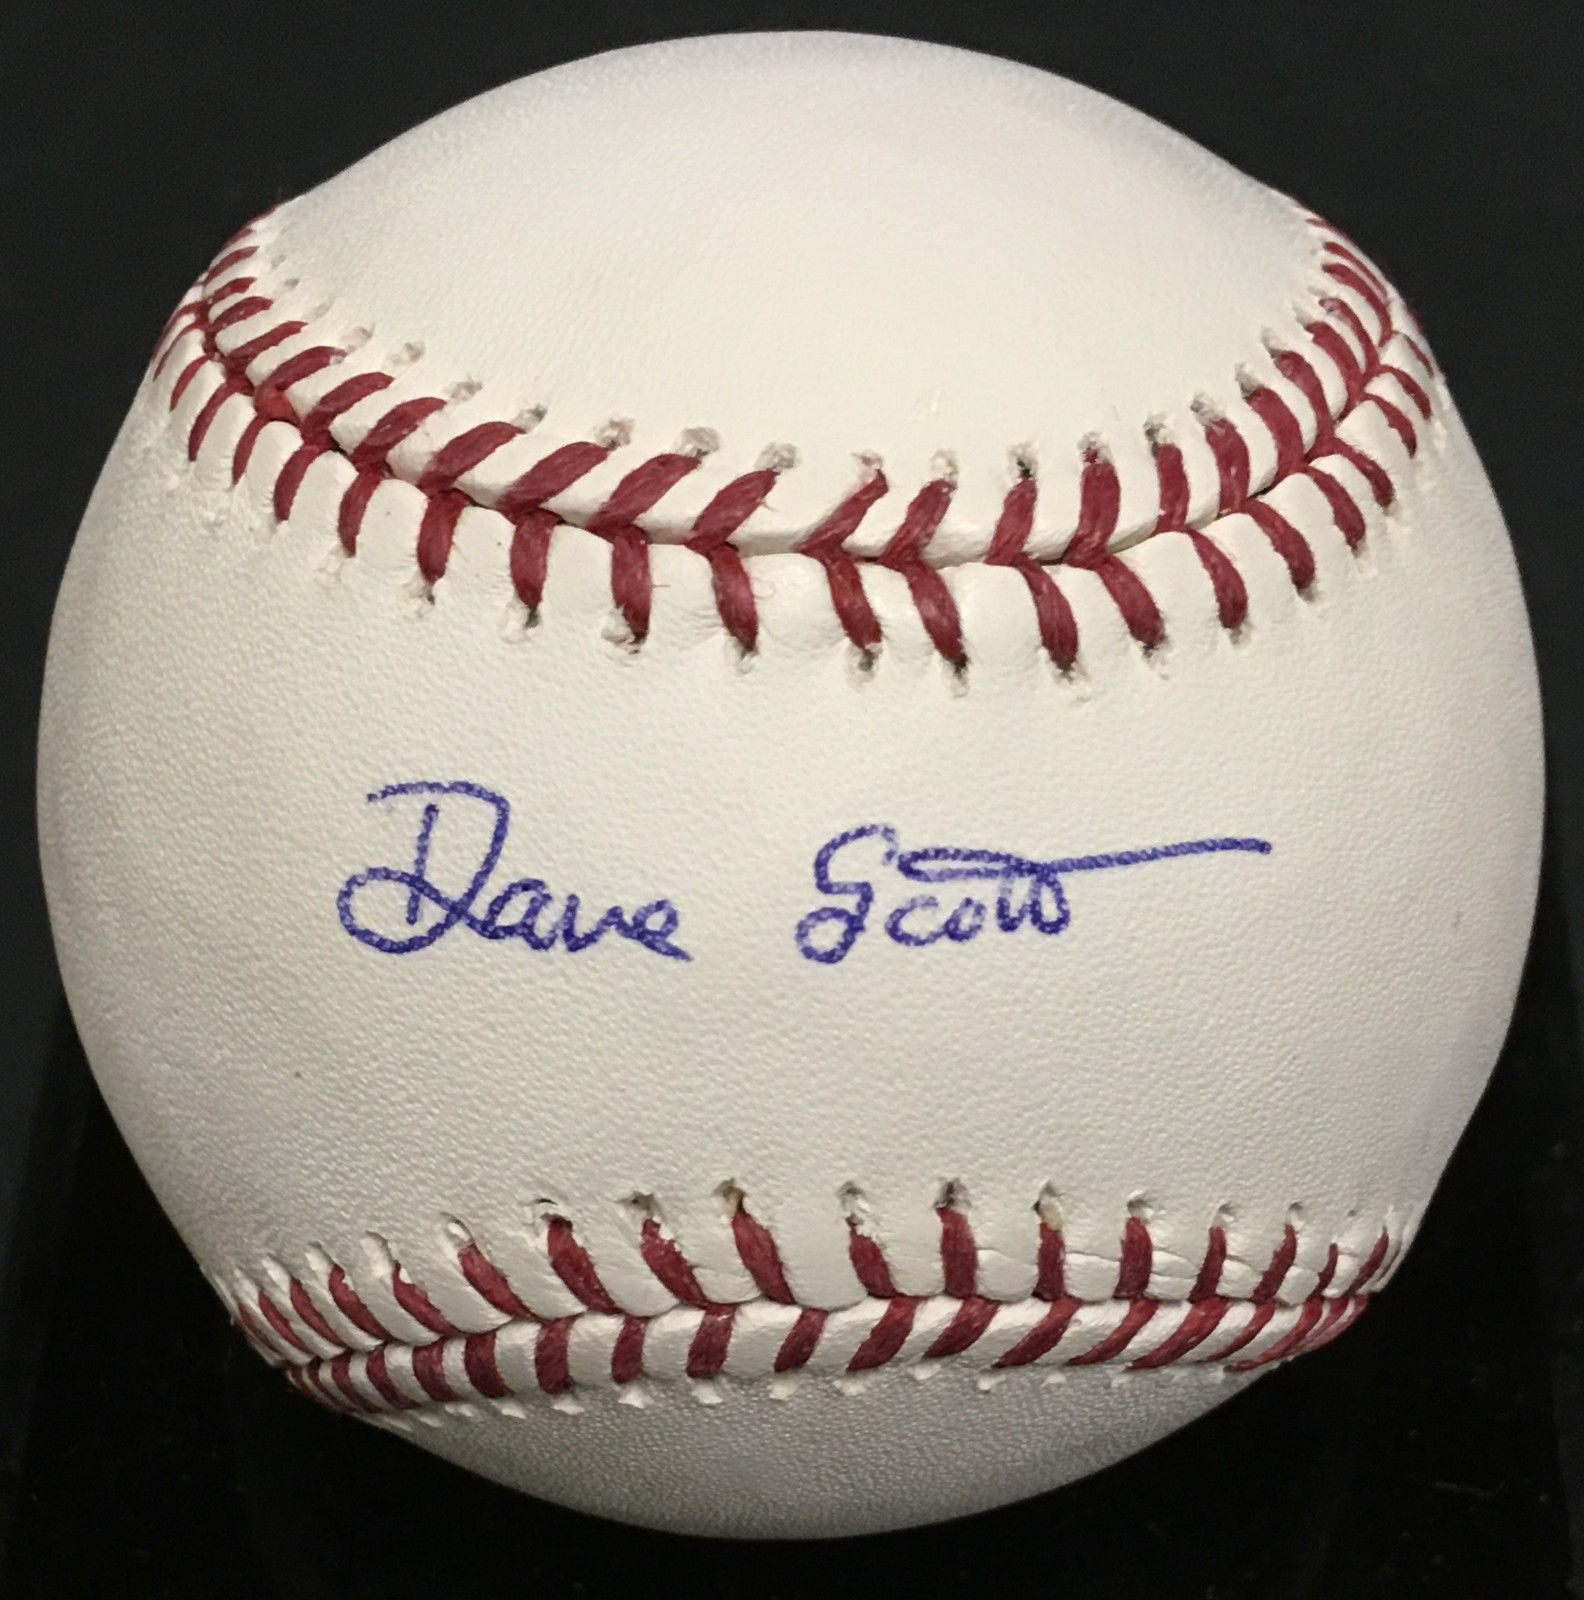 Dave Scott Apollo 15 astronaut signed official MLB Baseball rare auto JSA COA